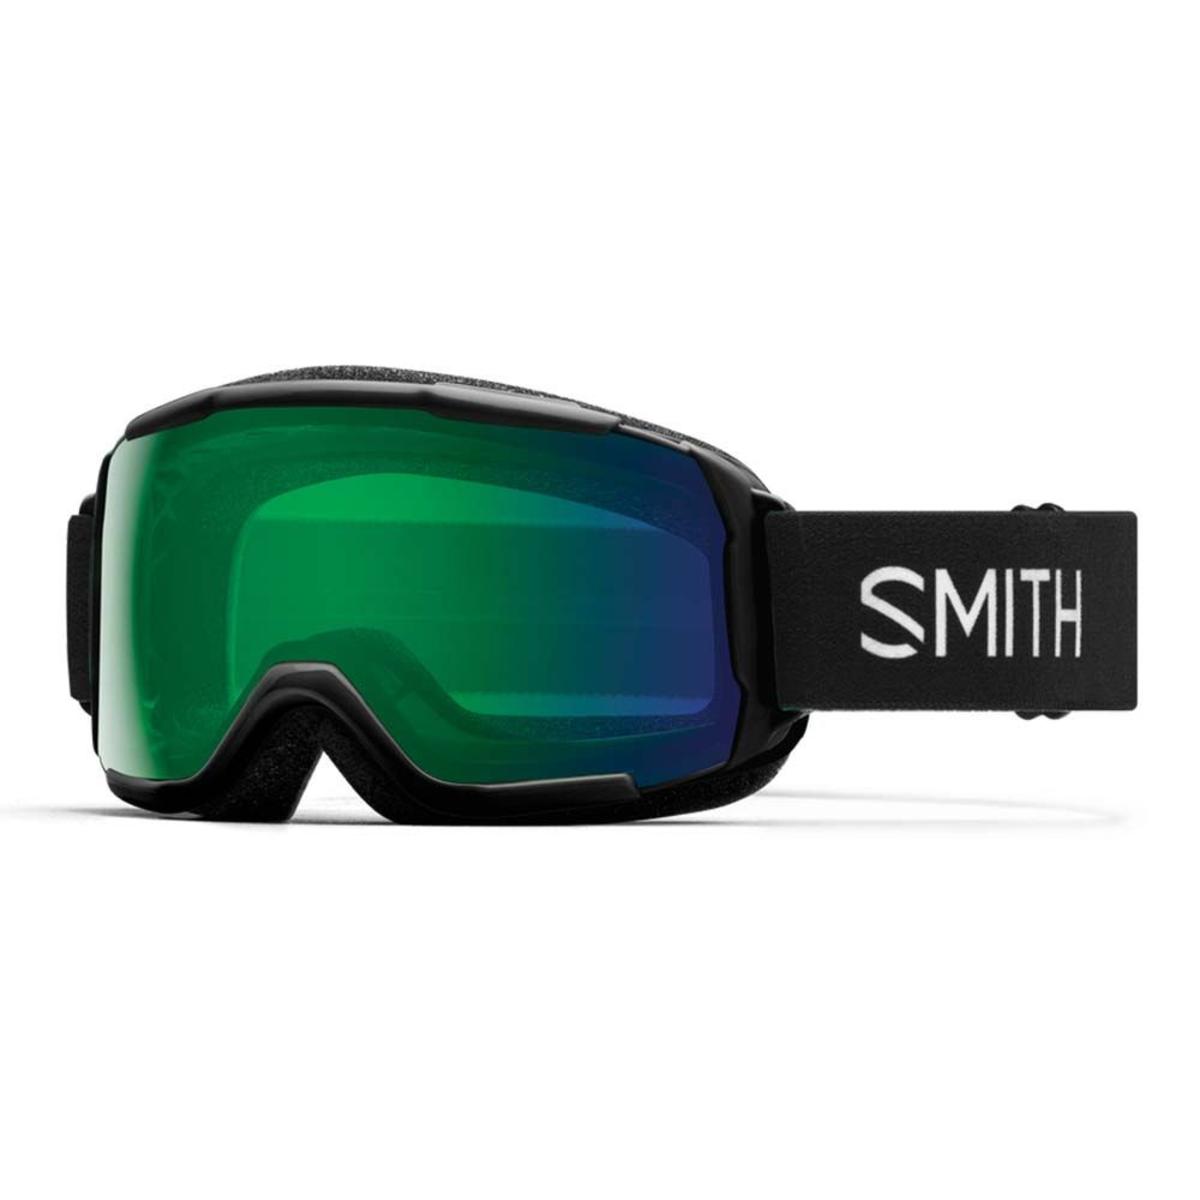 Smith Optics Grom Junior Goggles Chromapop Everyday Green Mirror - Black Frame